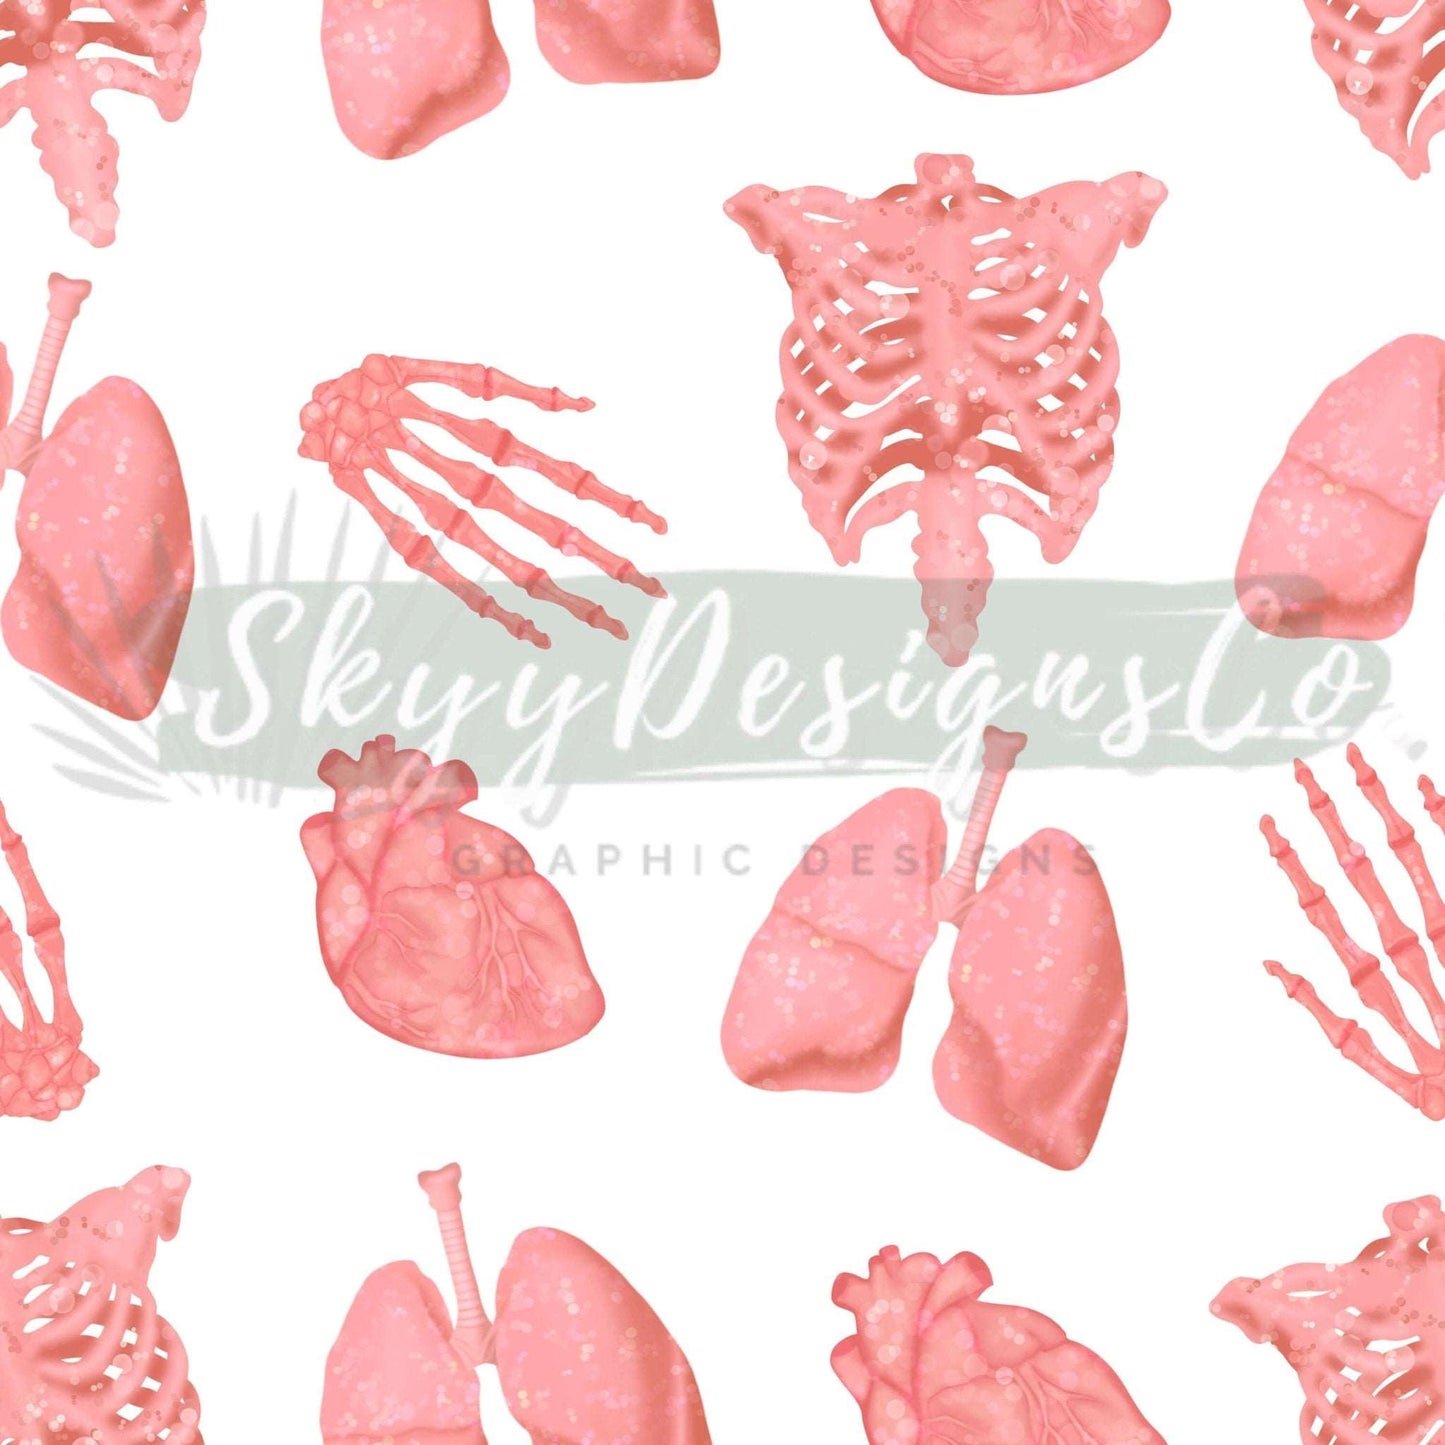 anatomy science organs seamless repeat pattern - SkyyDesignsCo